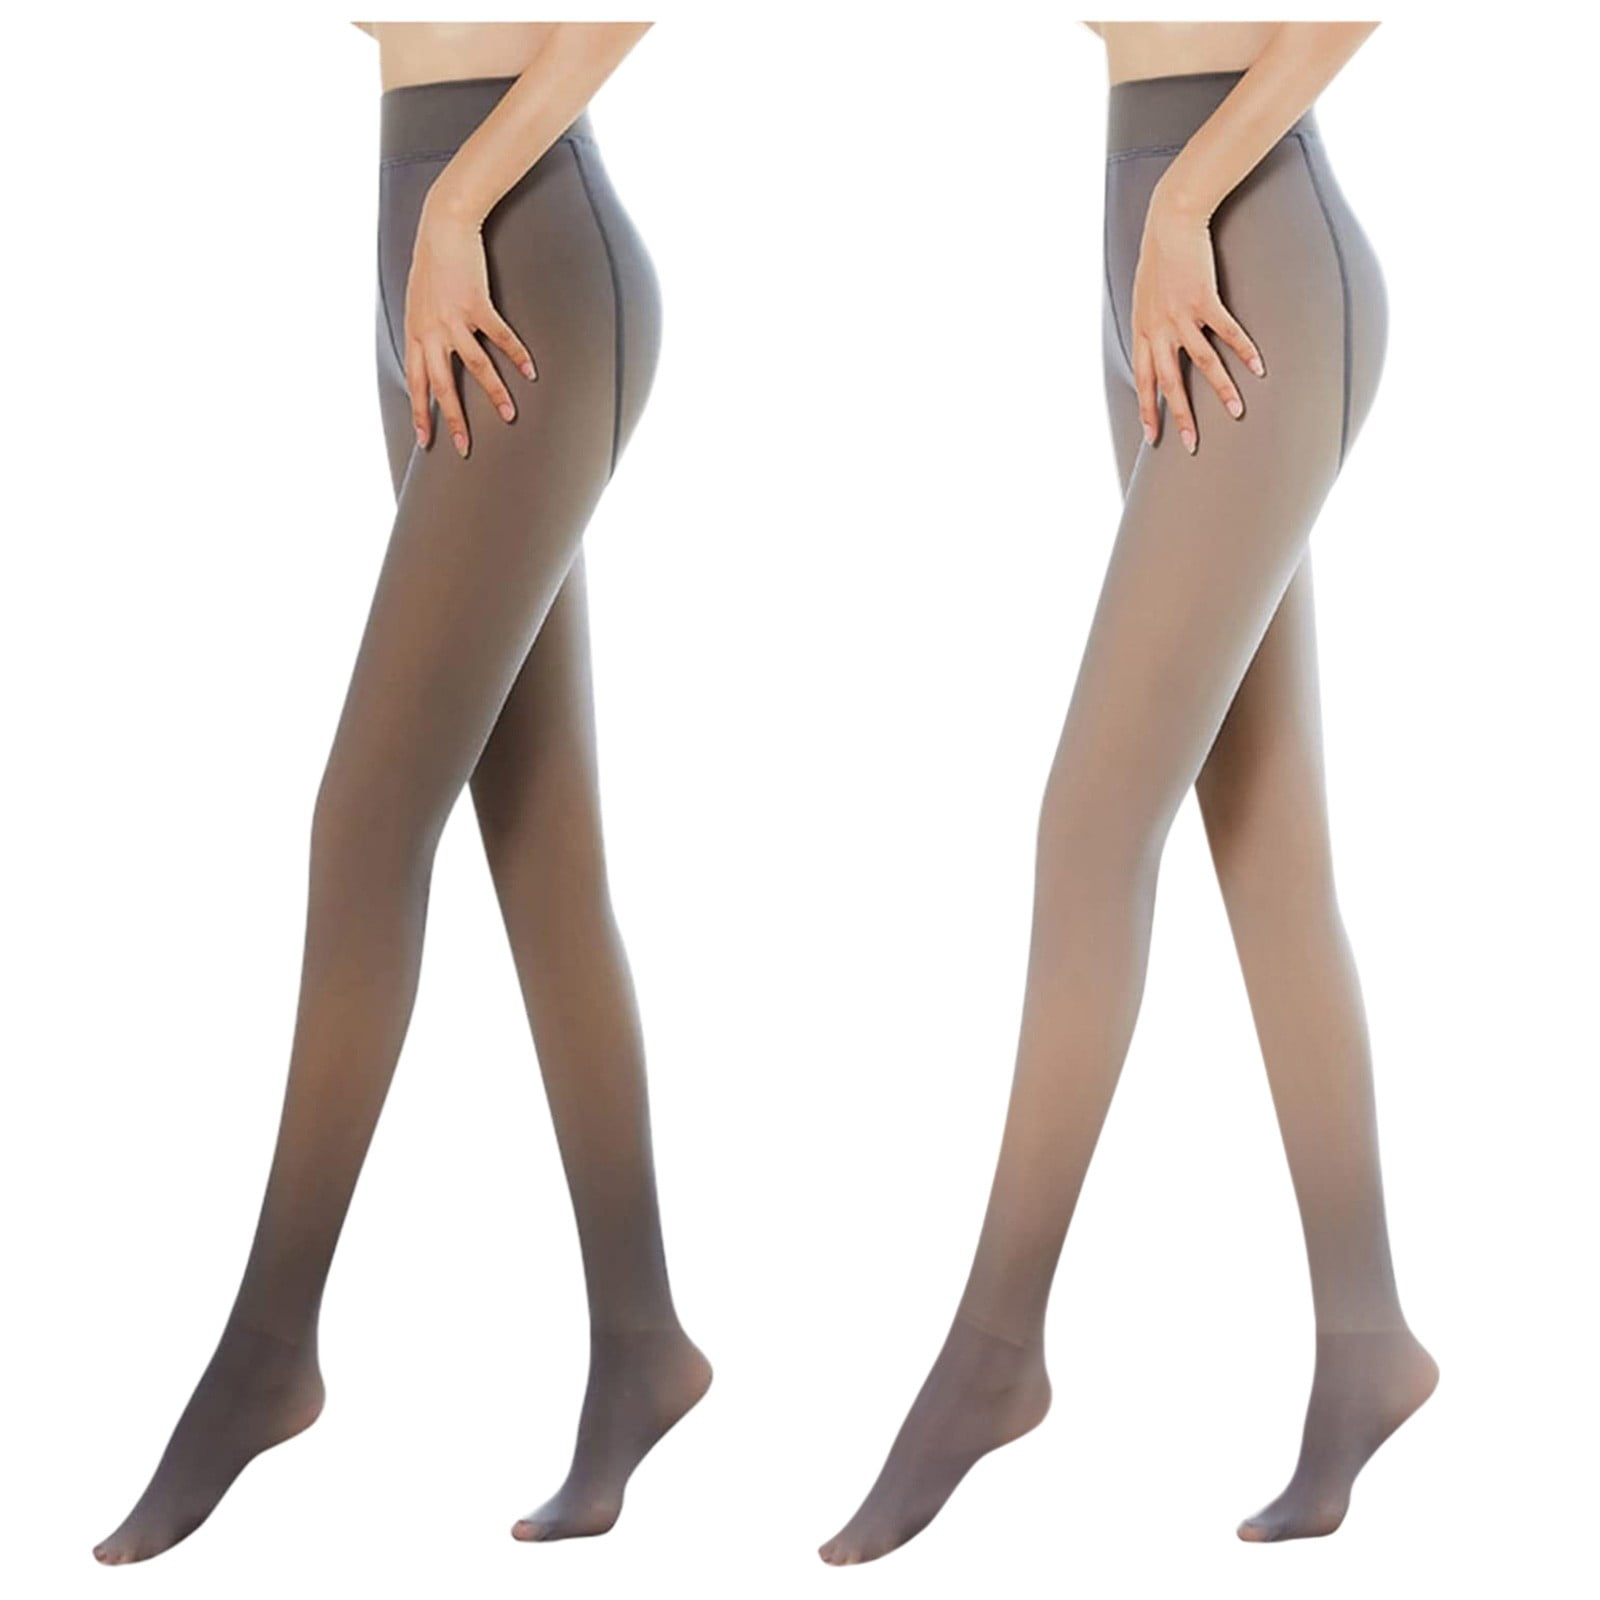 Leggs Pantyhose For Women Translucent Warm Pantyhose  -Black/Gray/Coffee 